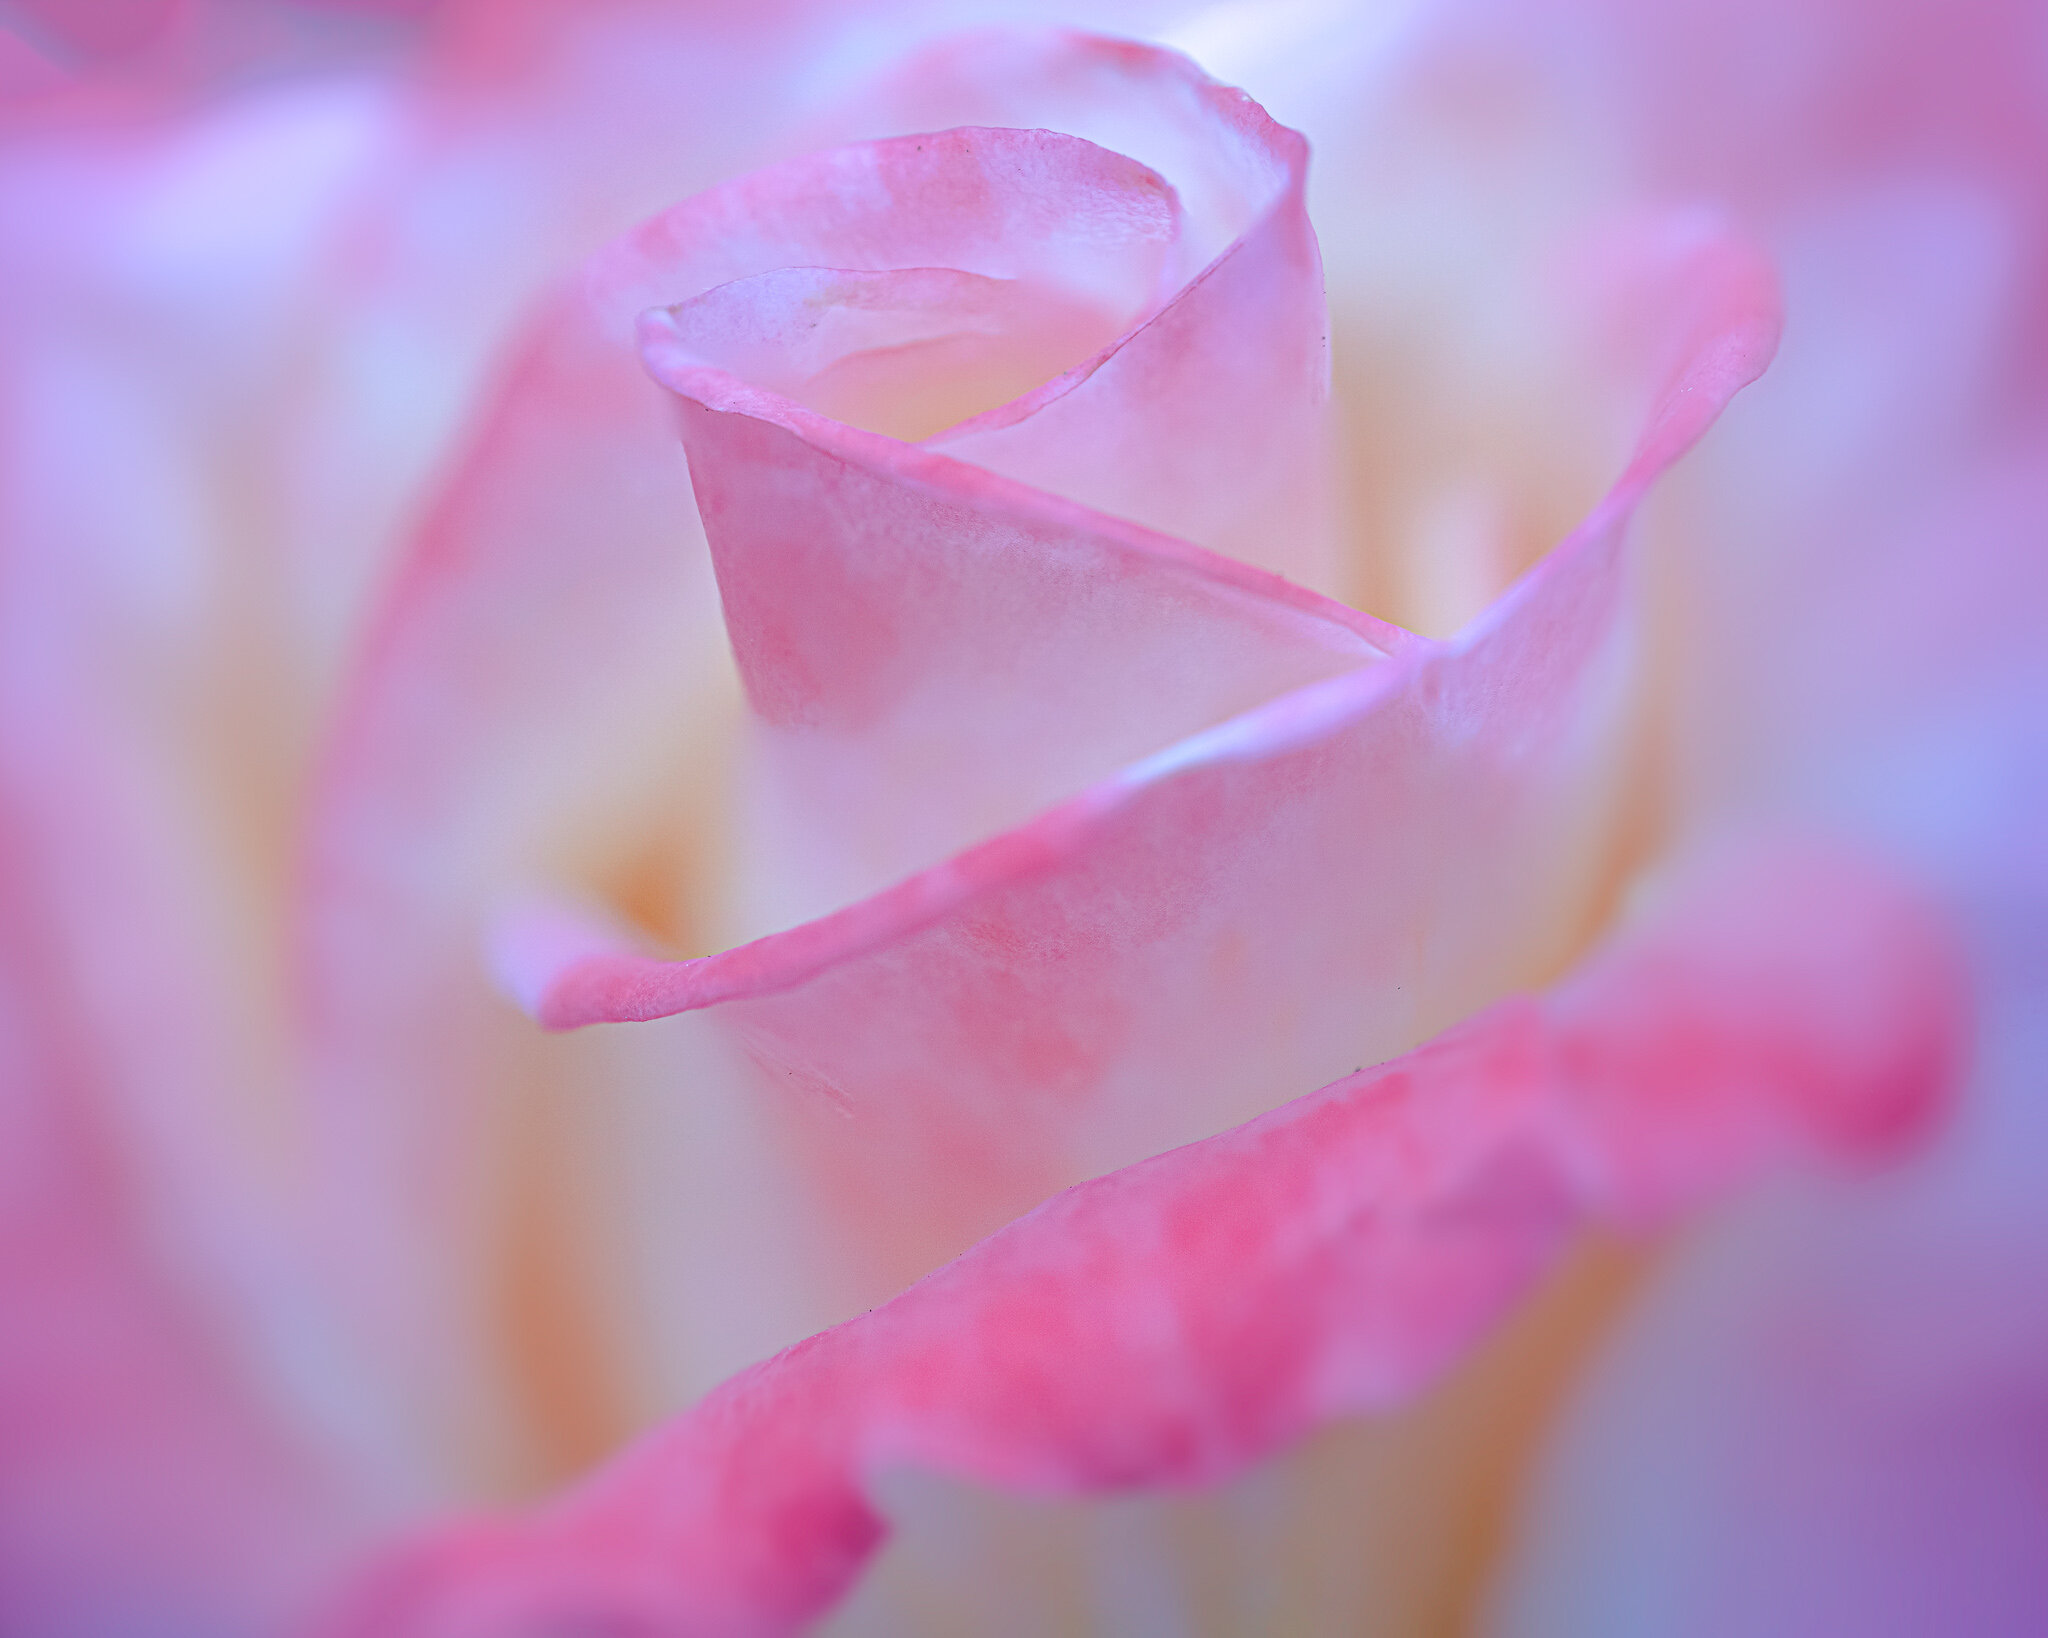 090519-Roses-001-343-Edit.jpg